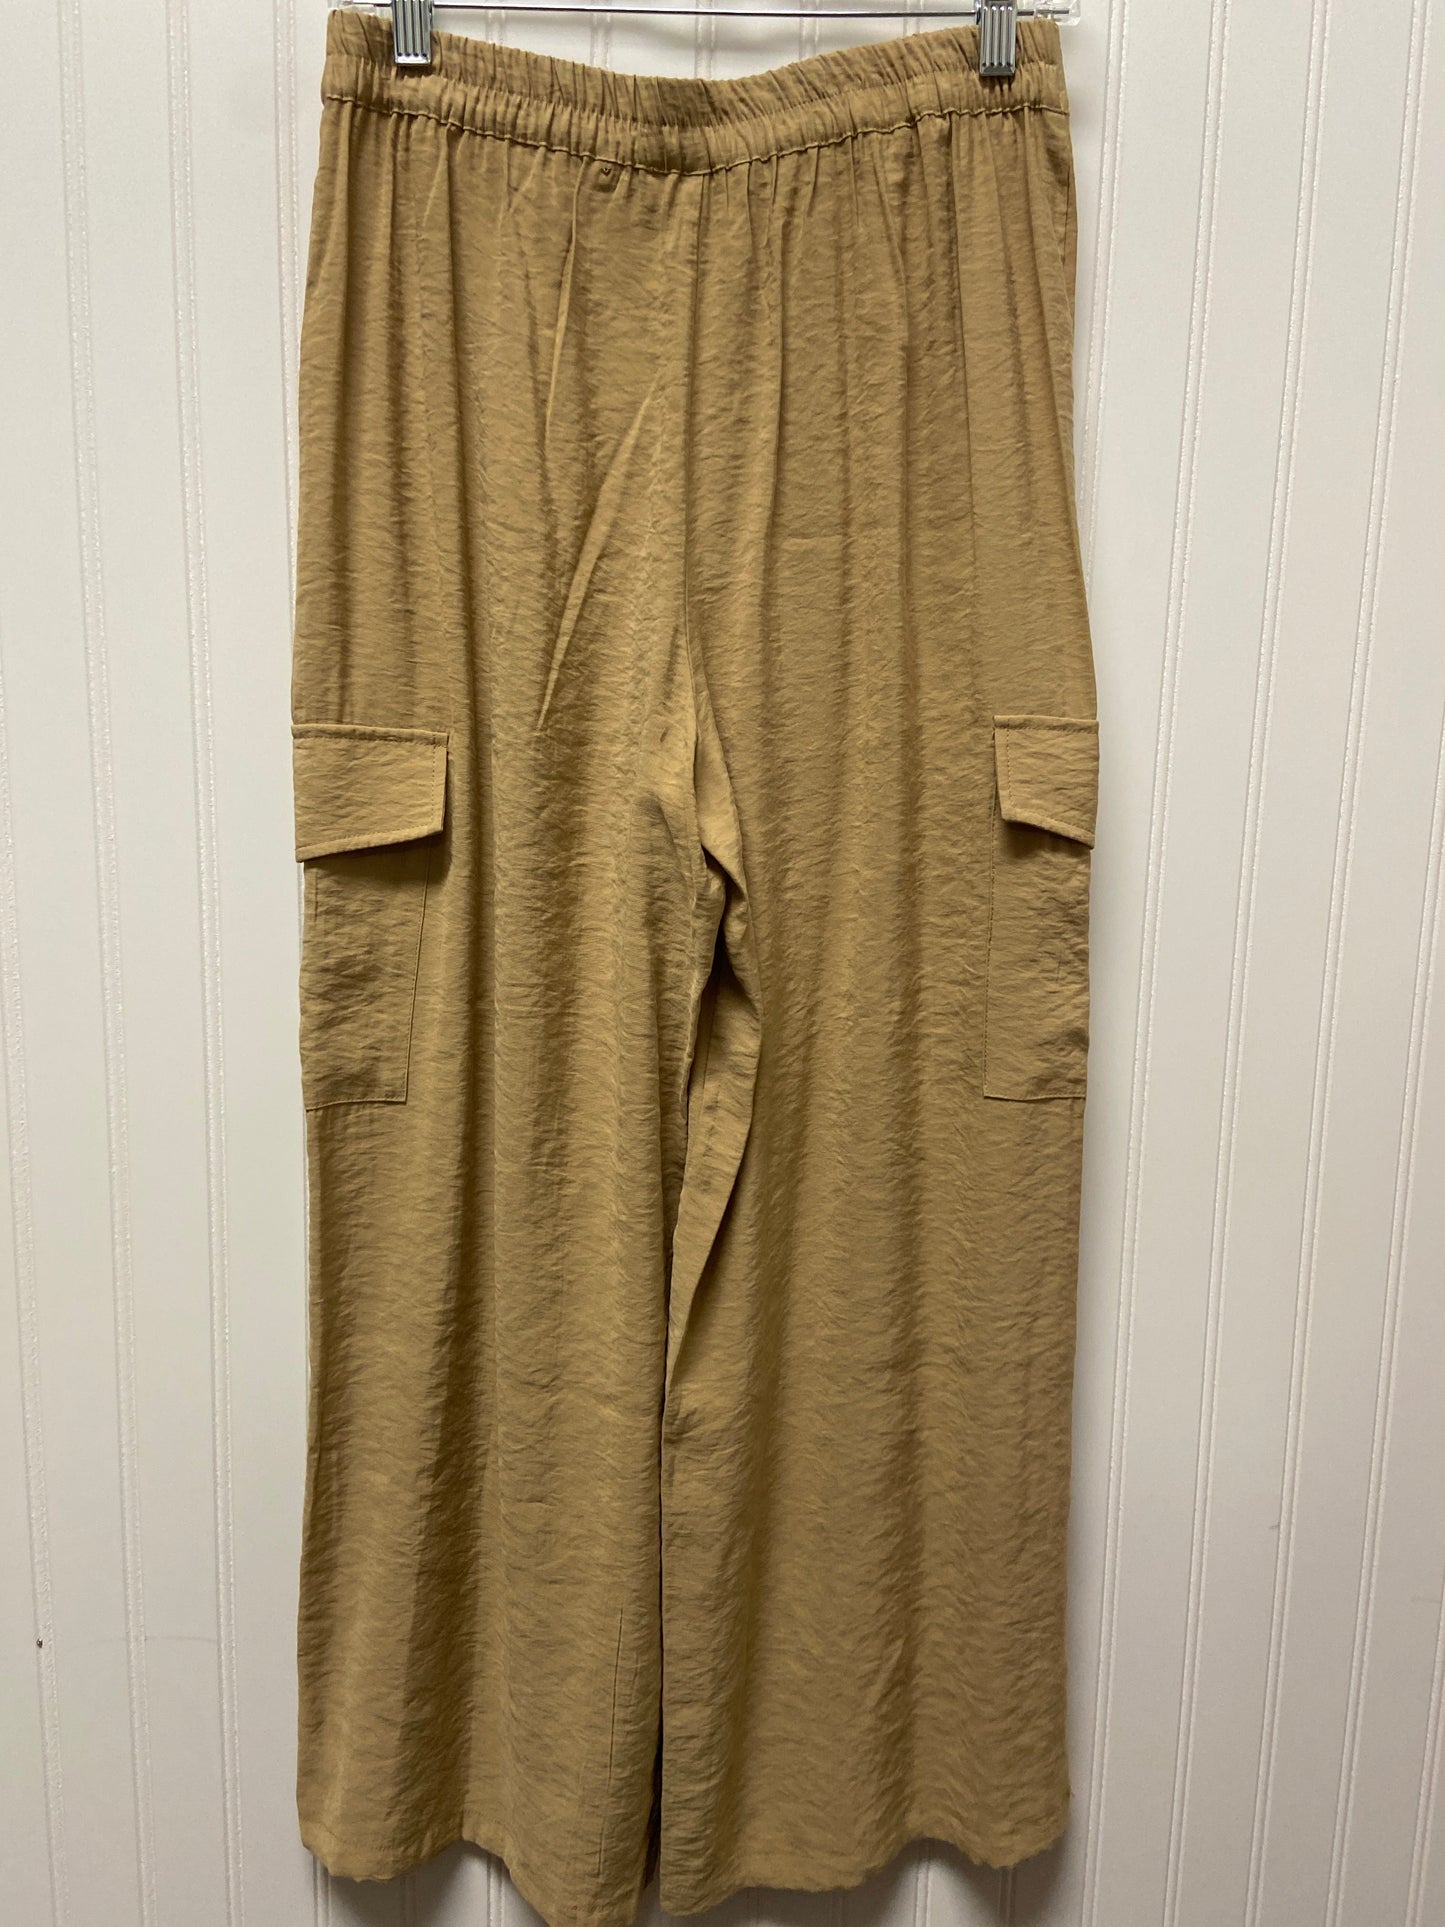 Pants Work/dress By Rachel Roy  Size: 4